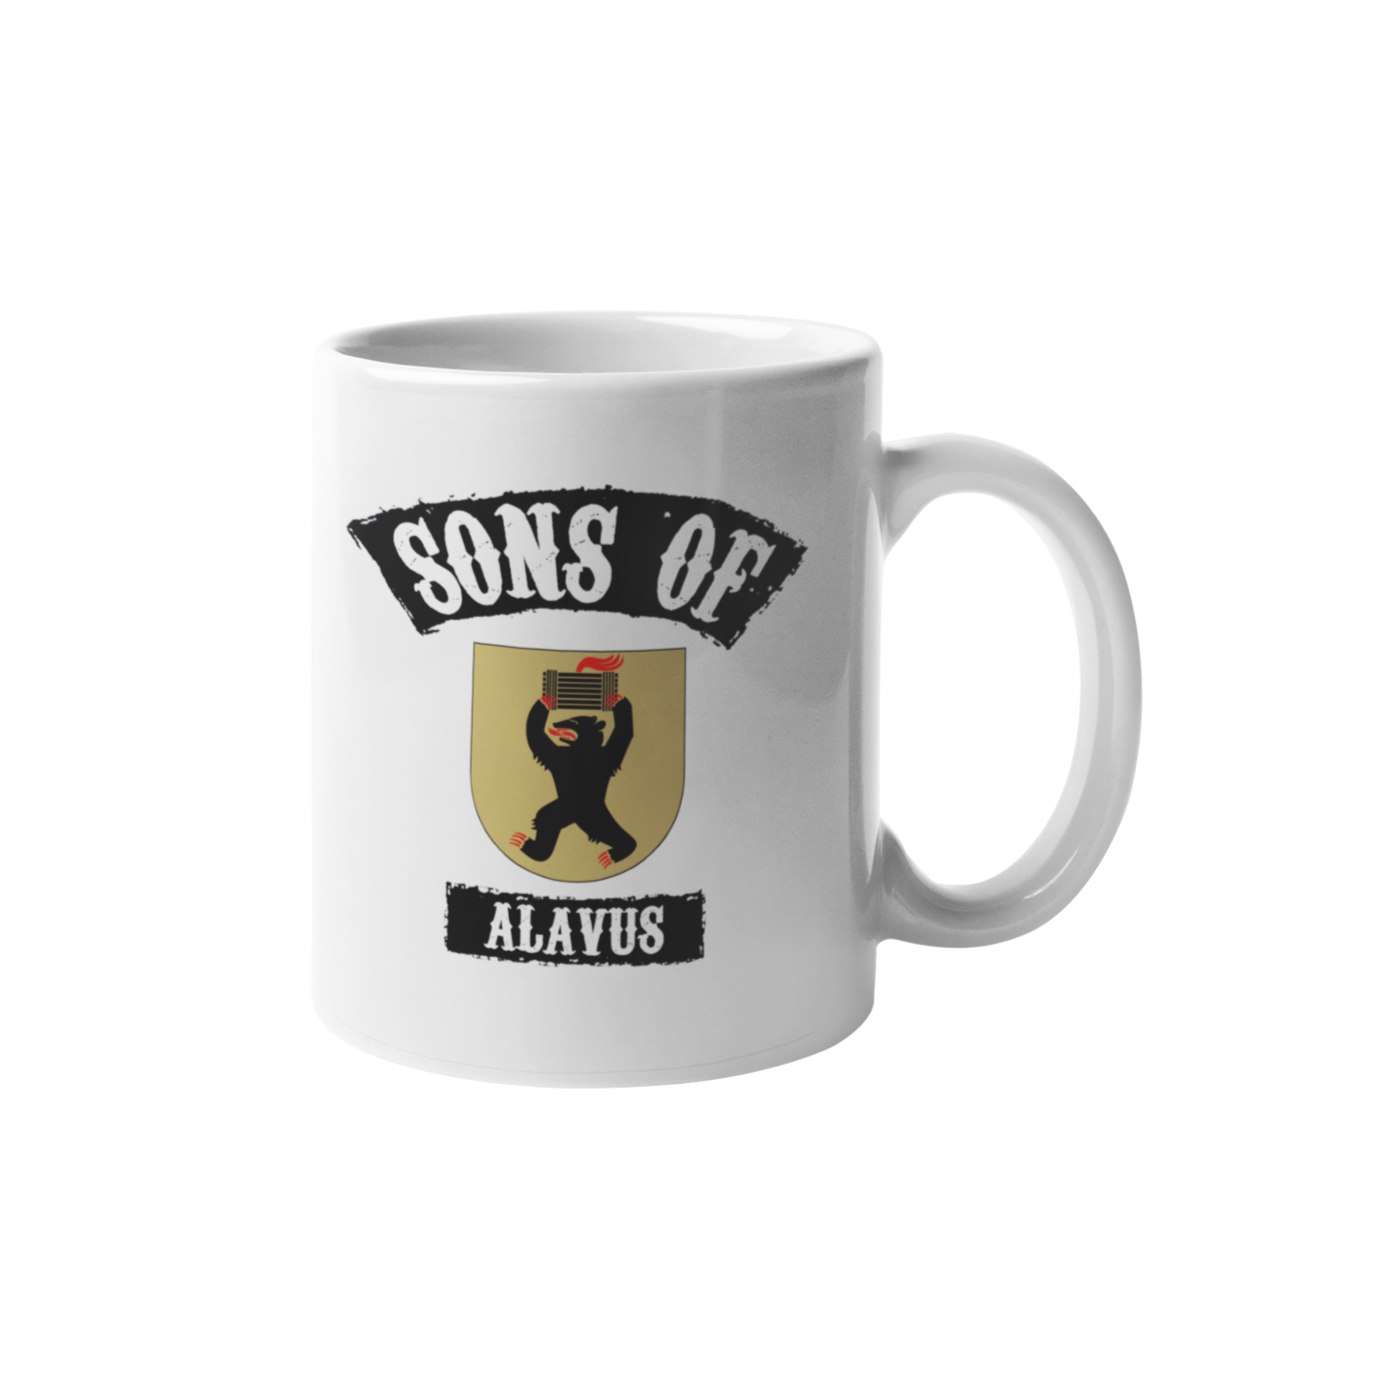 Sons of Alavus mug